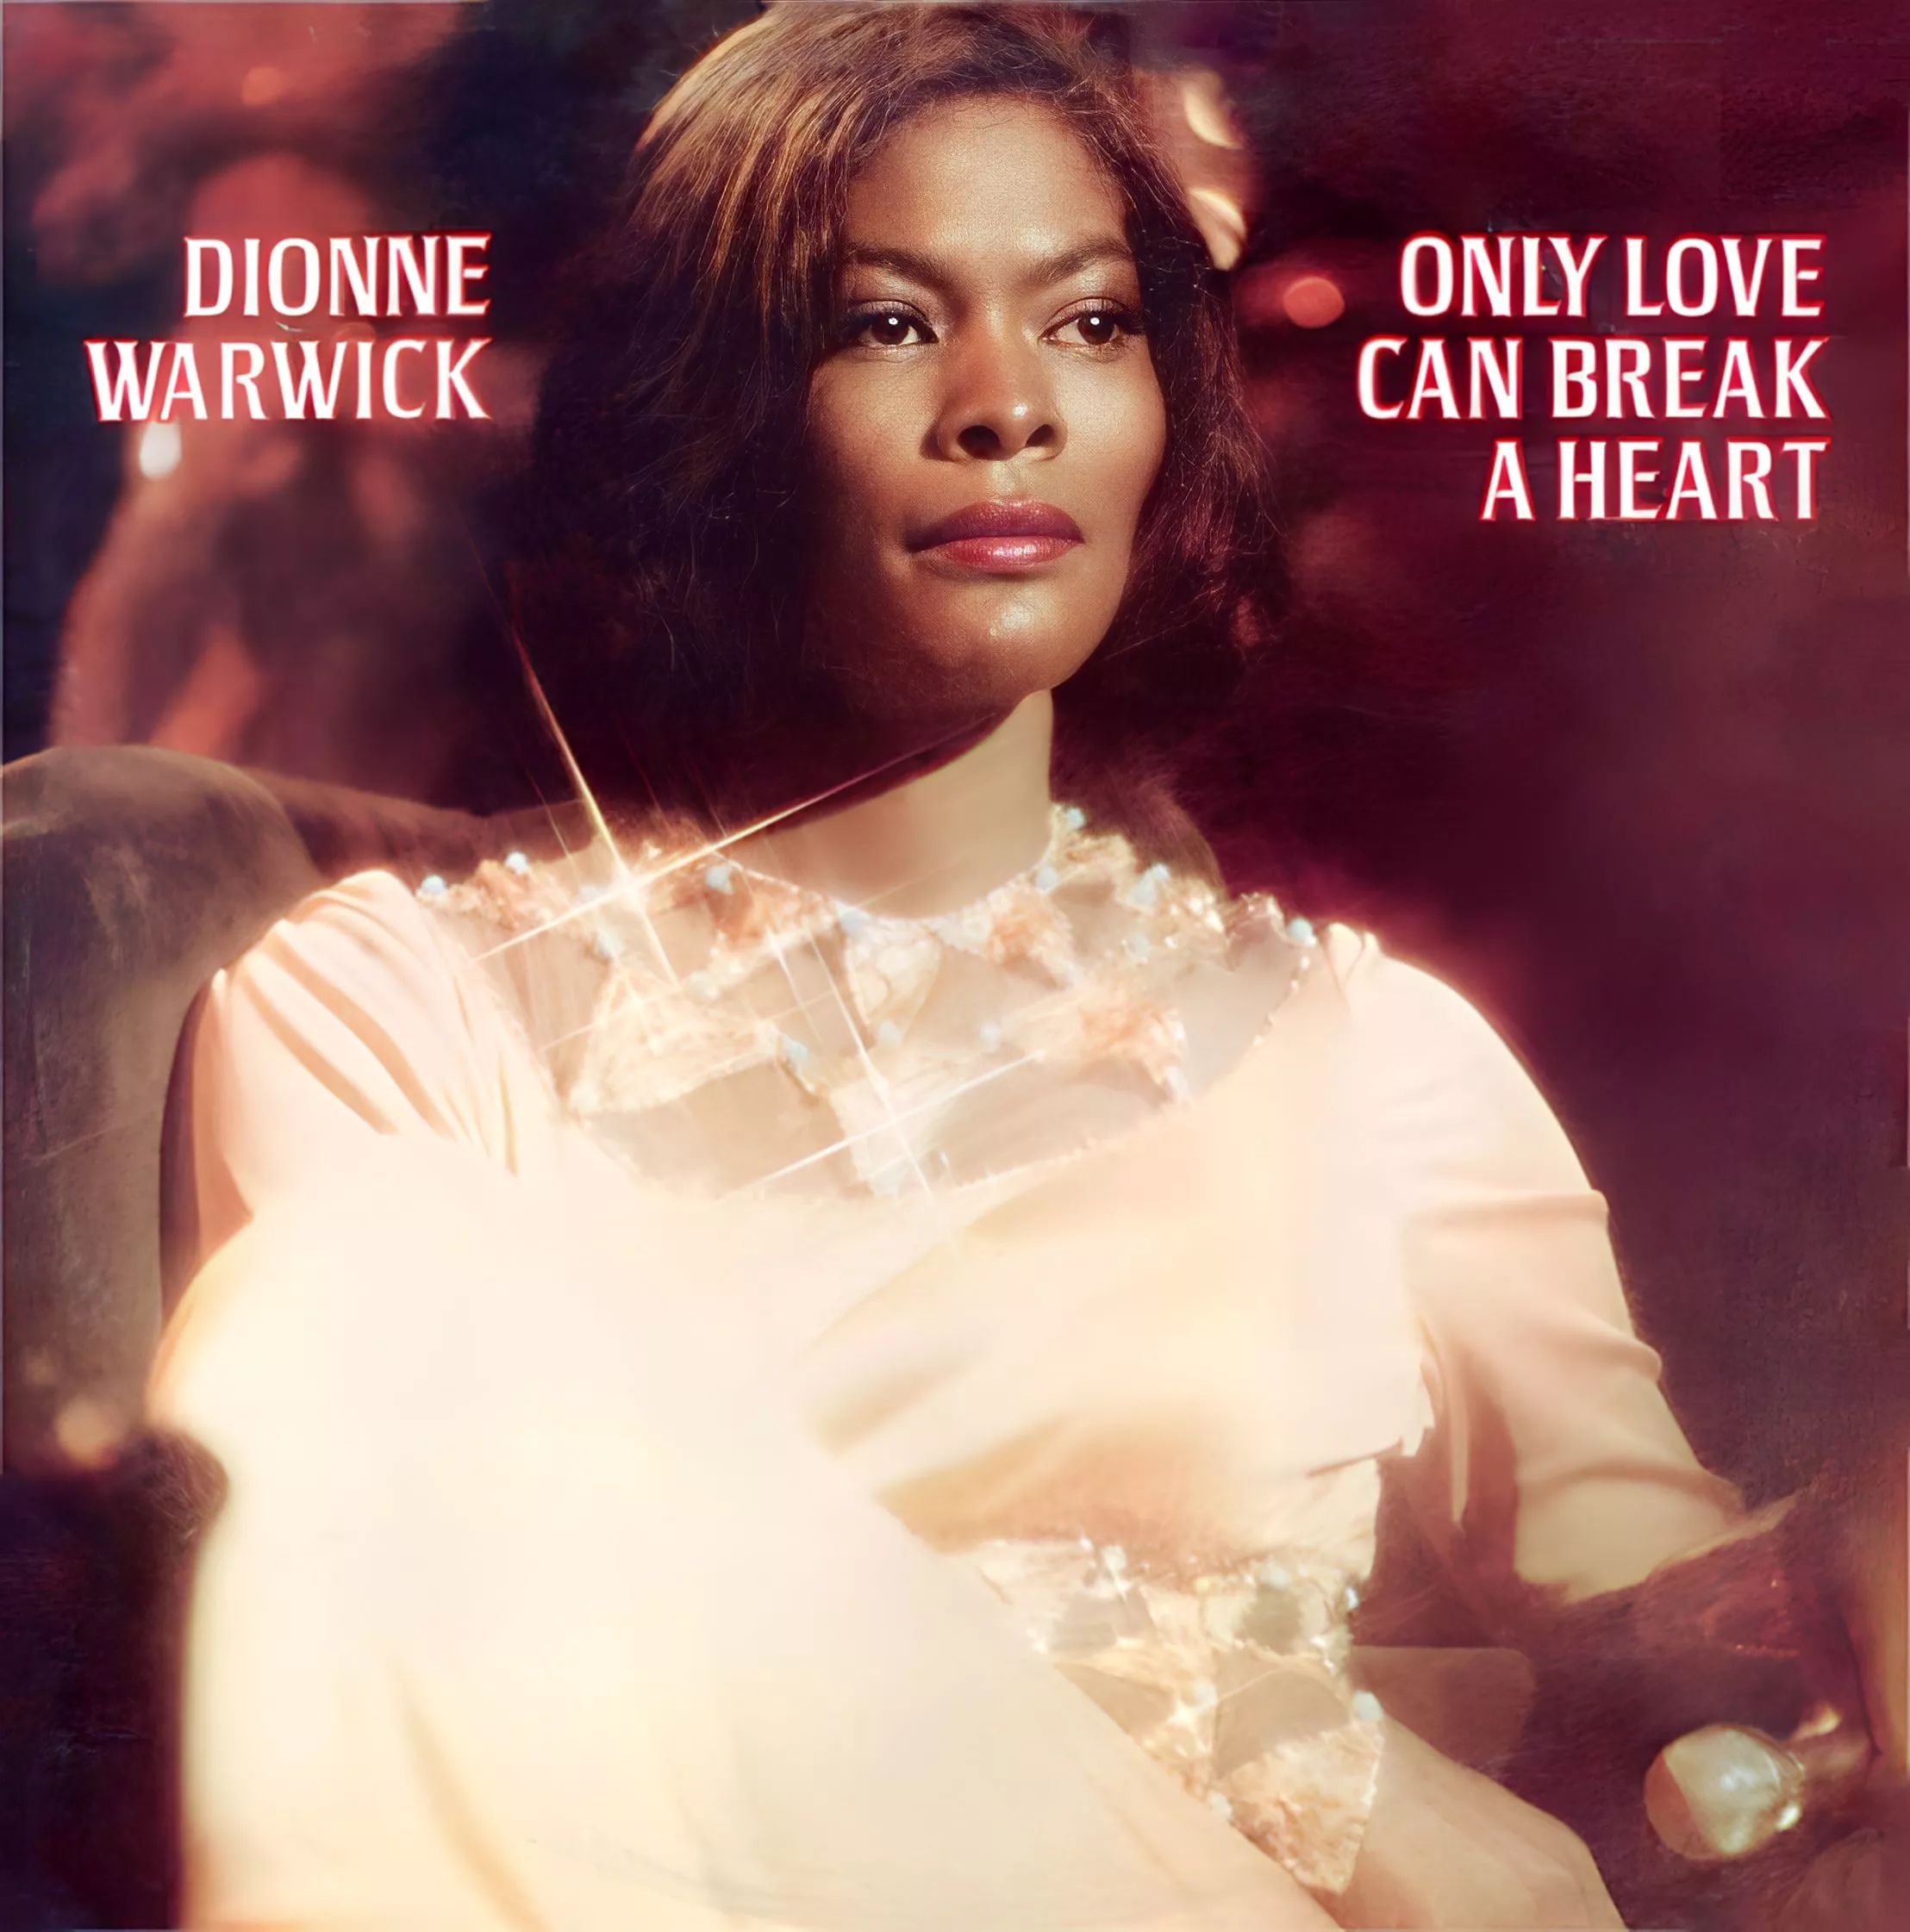 I'll never Fal in Love Again (tradução/letra) - Dionne Warwick